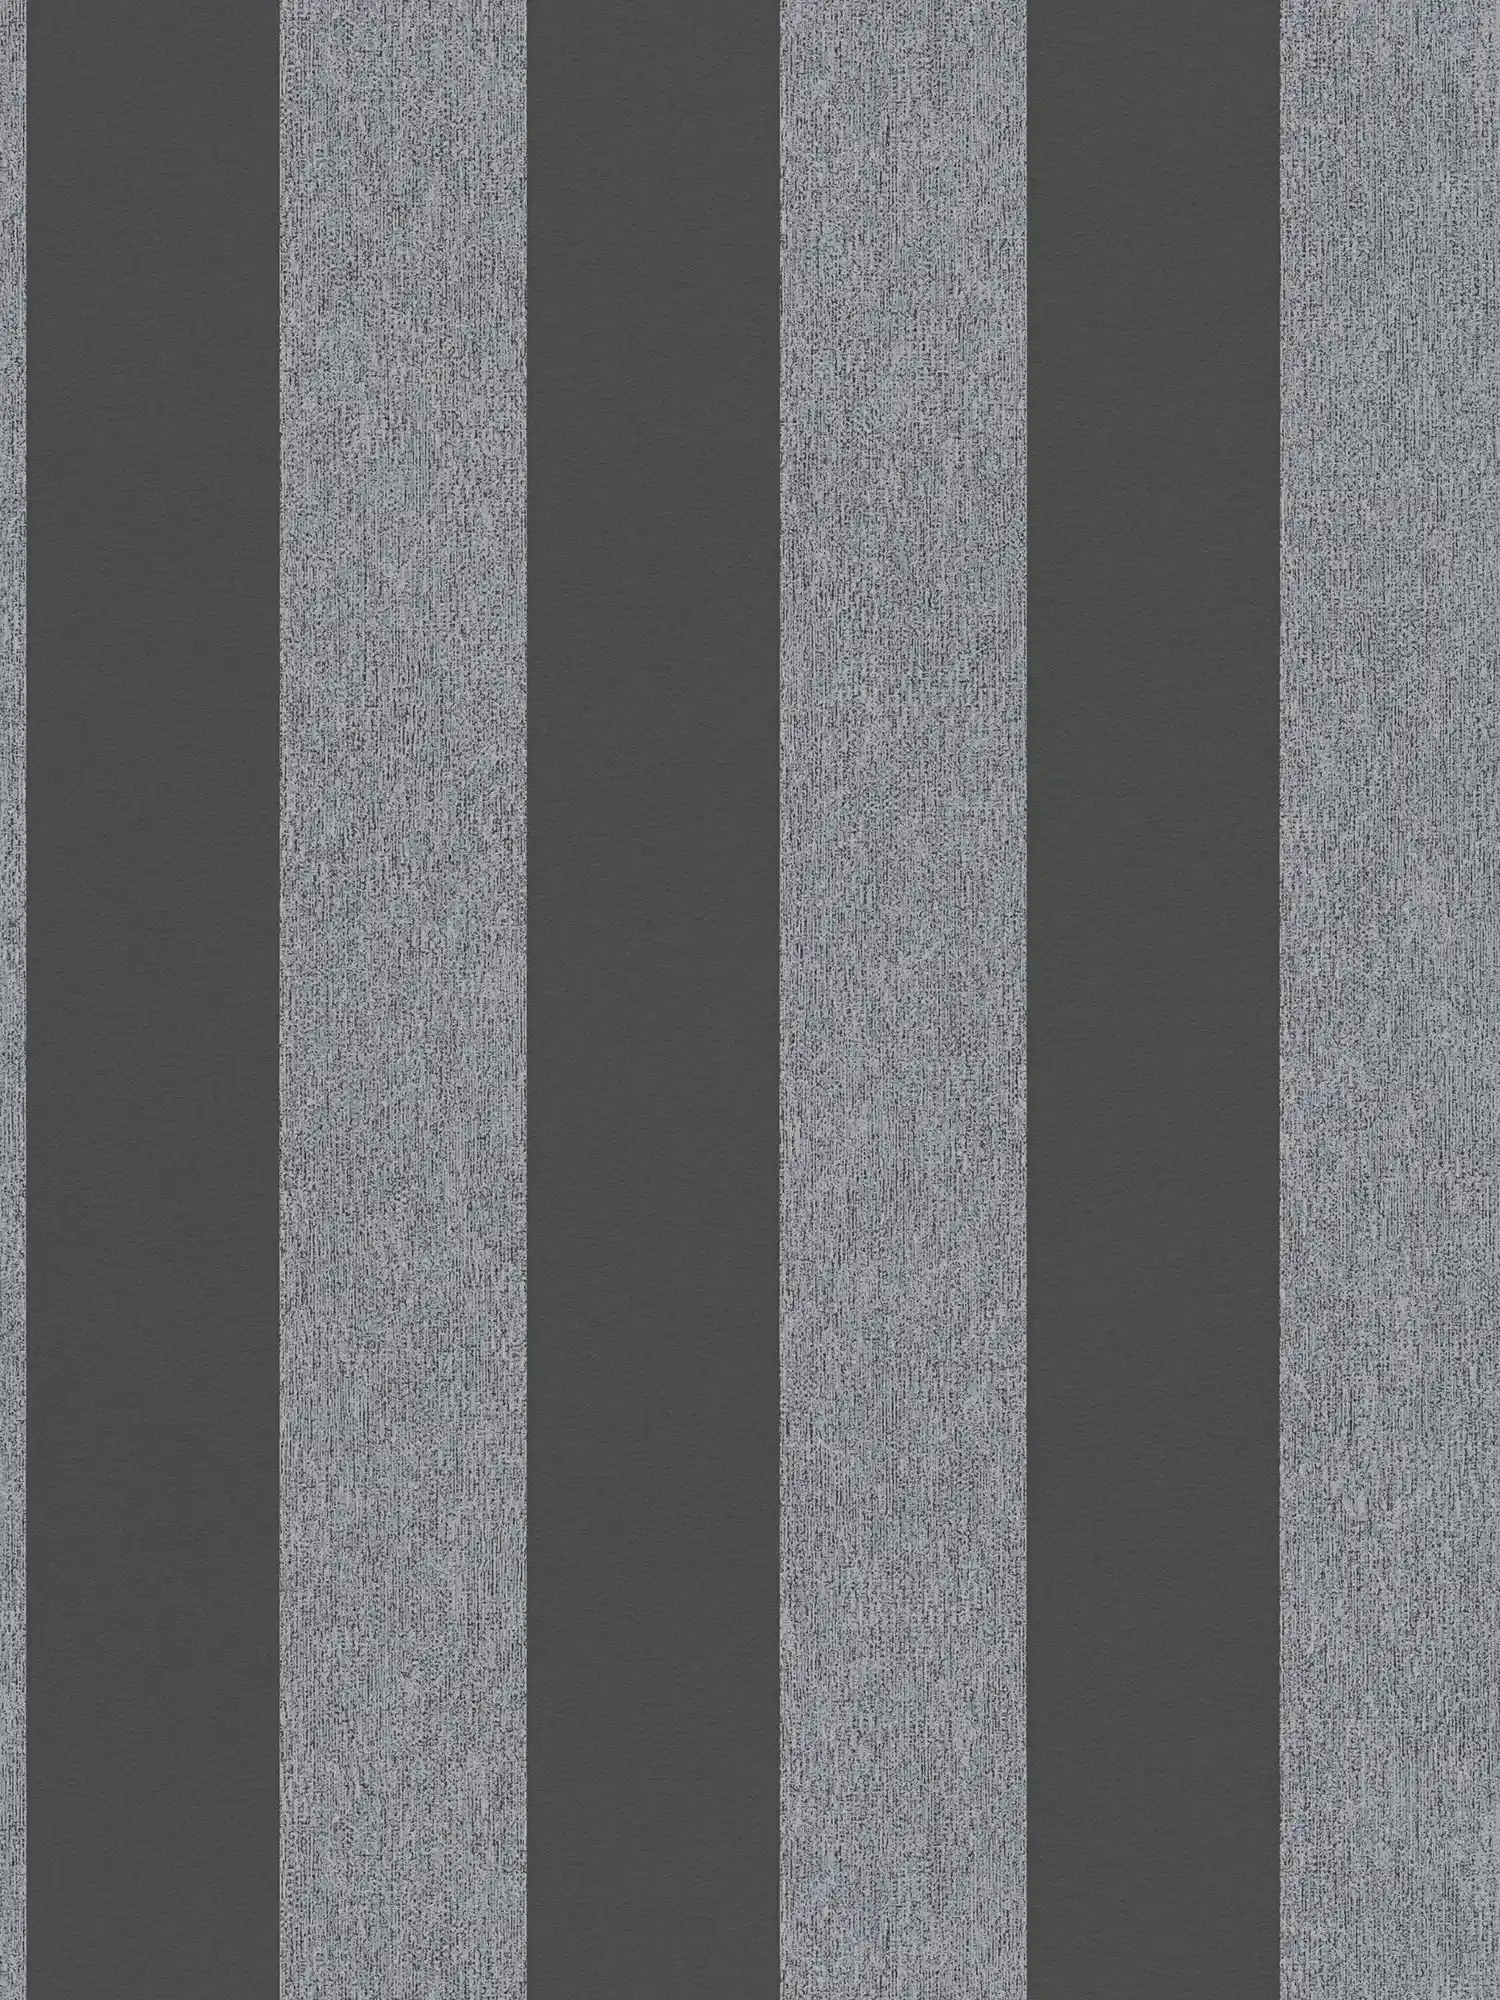         Stripes non-woven wallpaper in matt textured look - black, grey
    